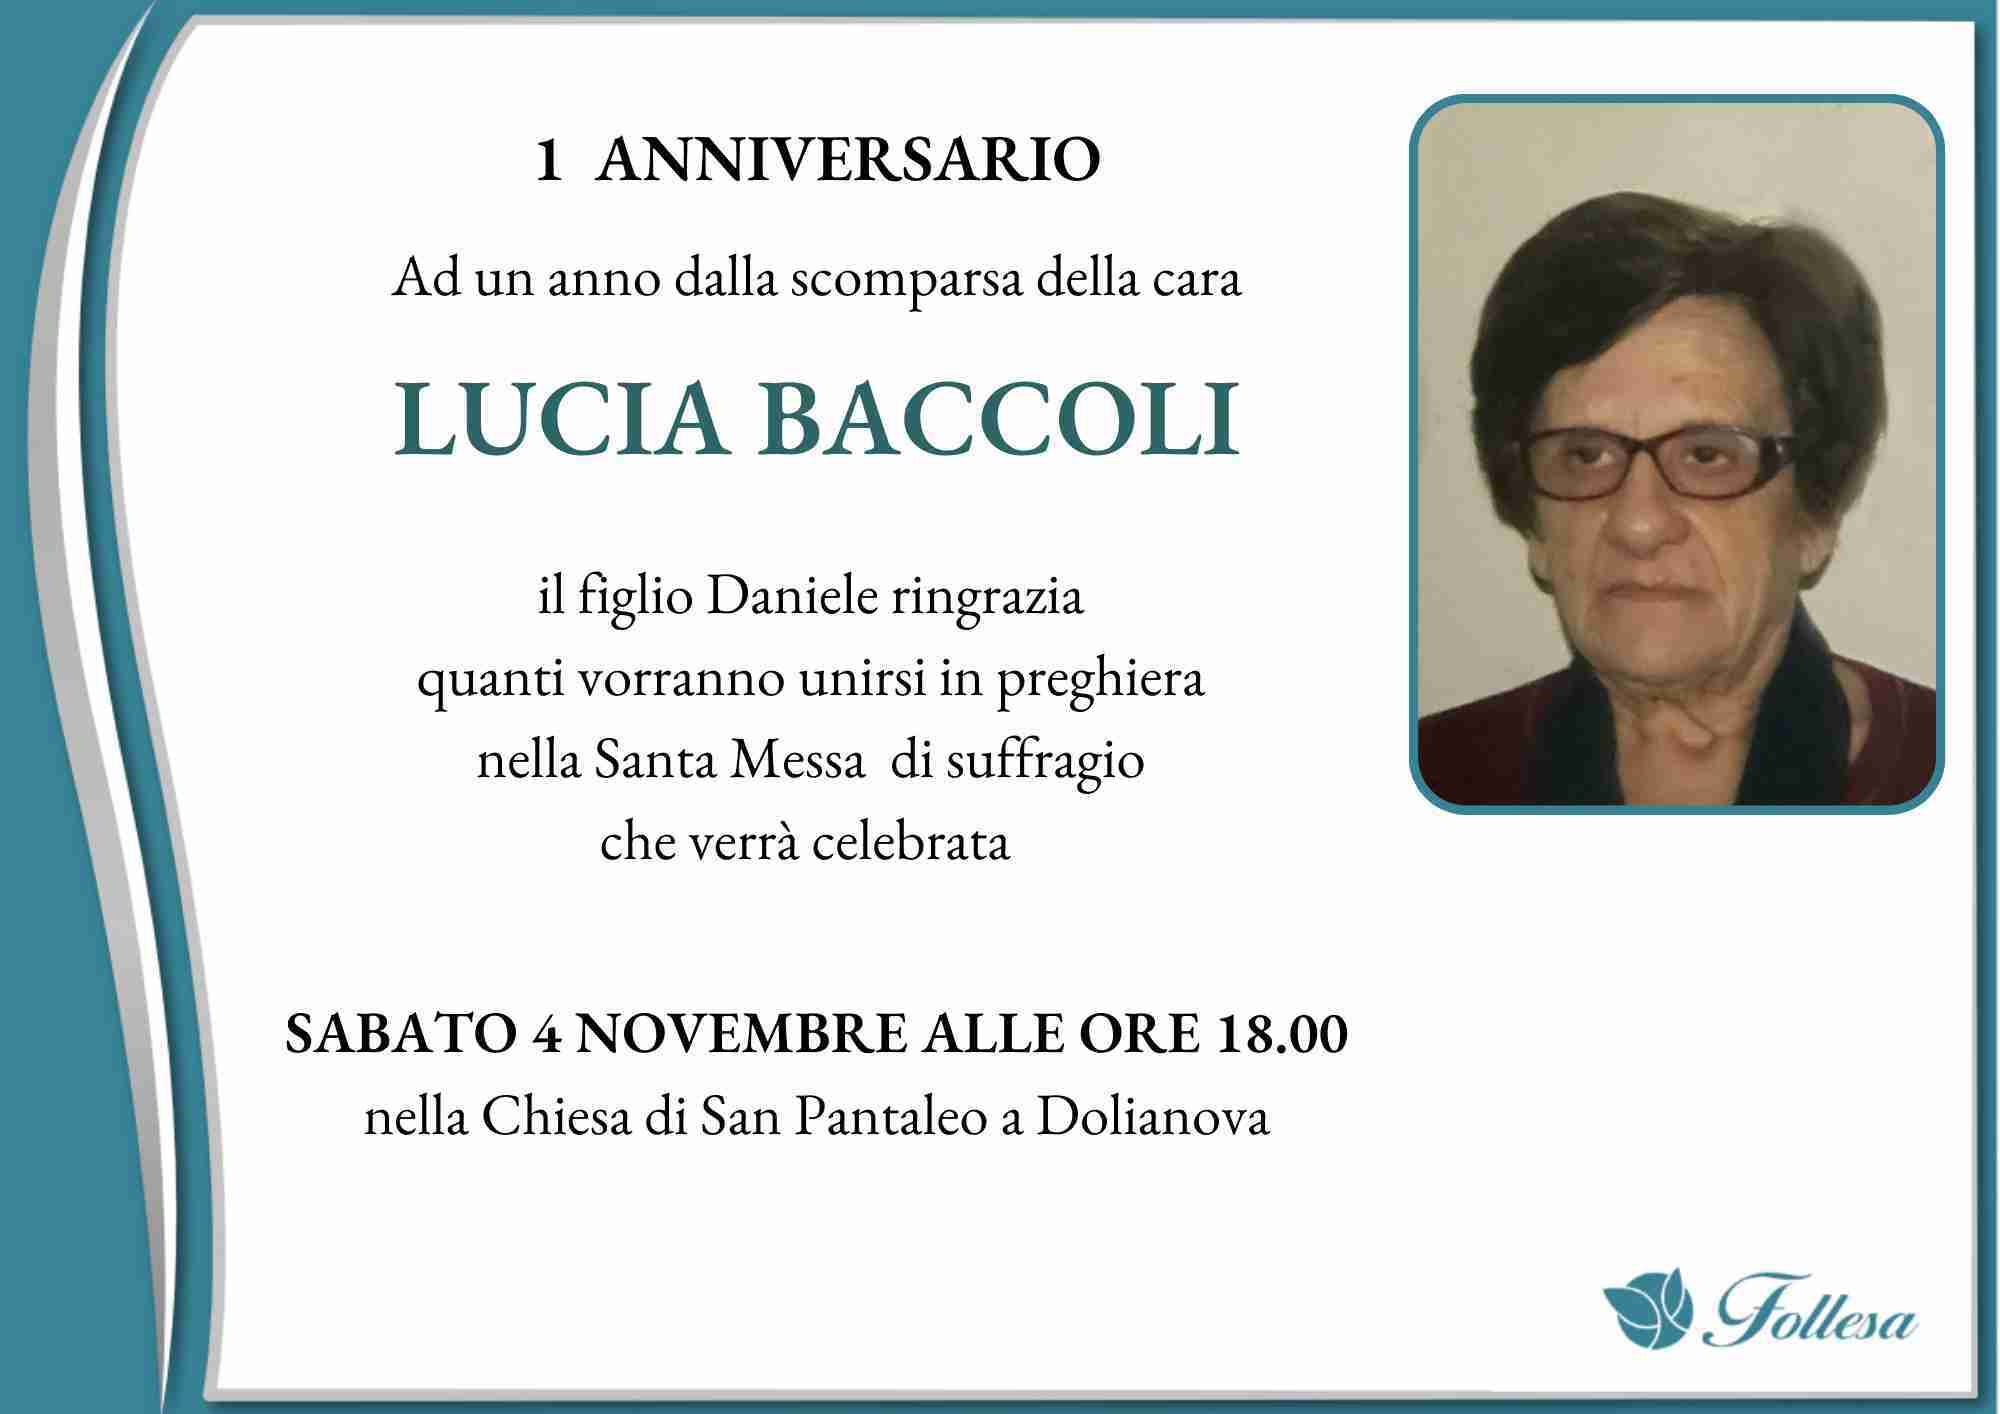 Lucia Baccoli